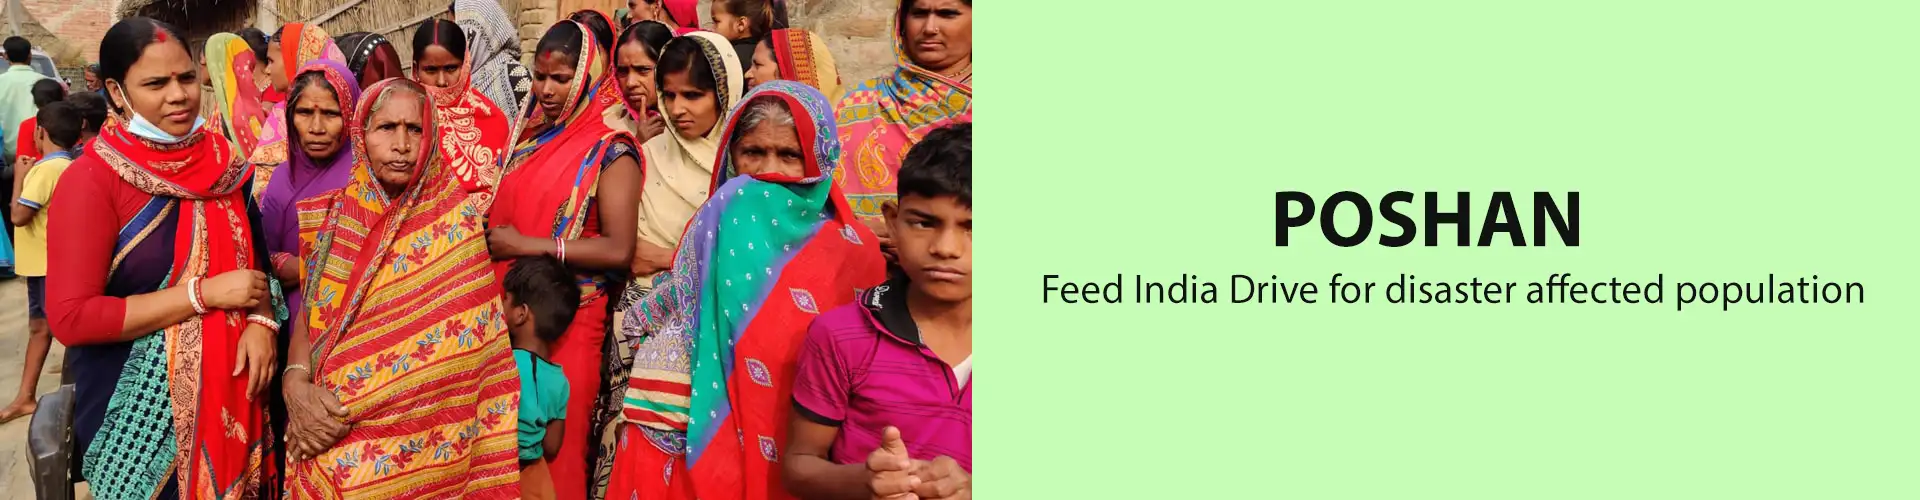 Feed India Drive